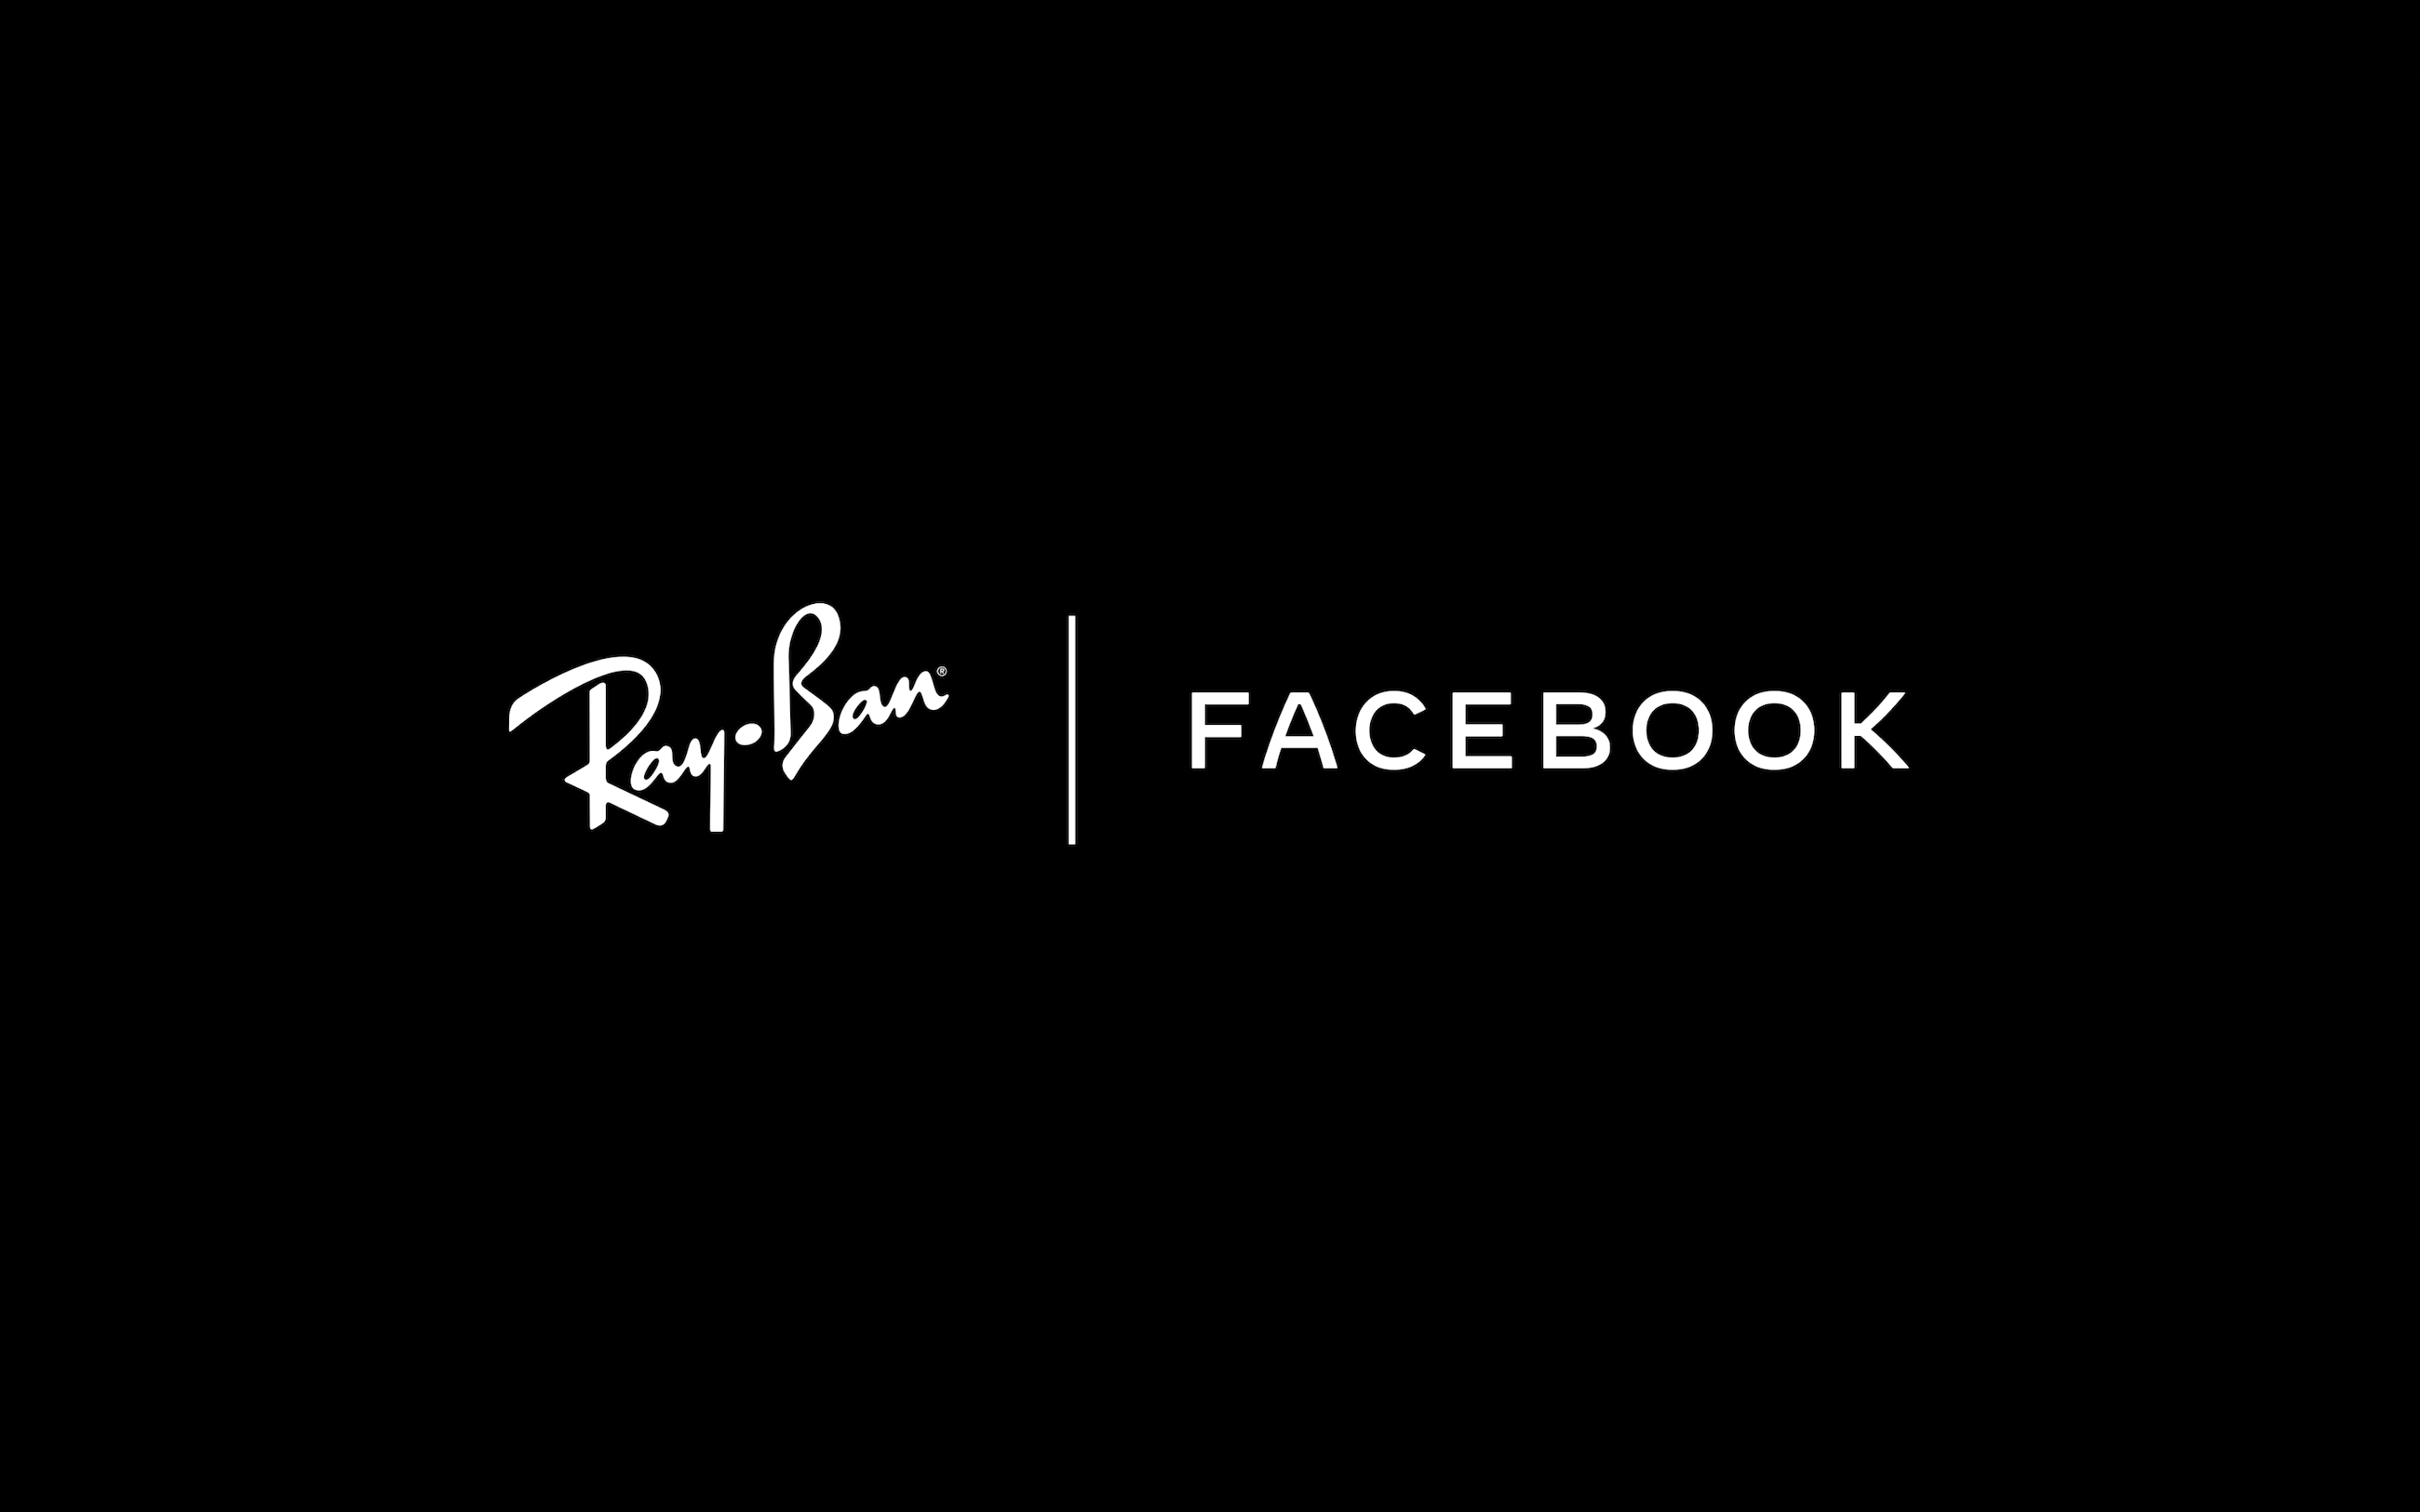 Facebook-RB